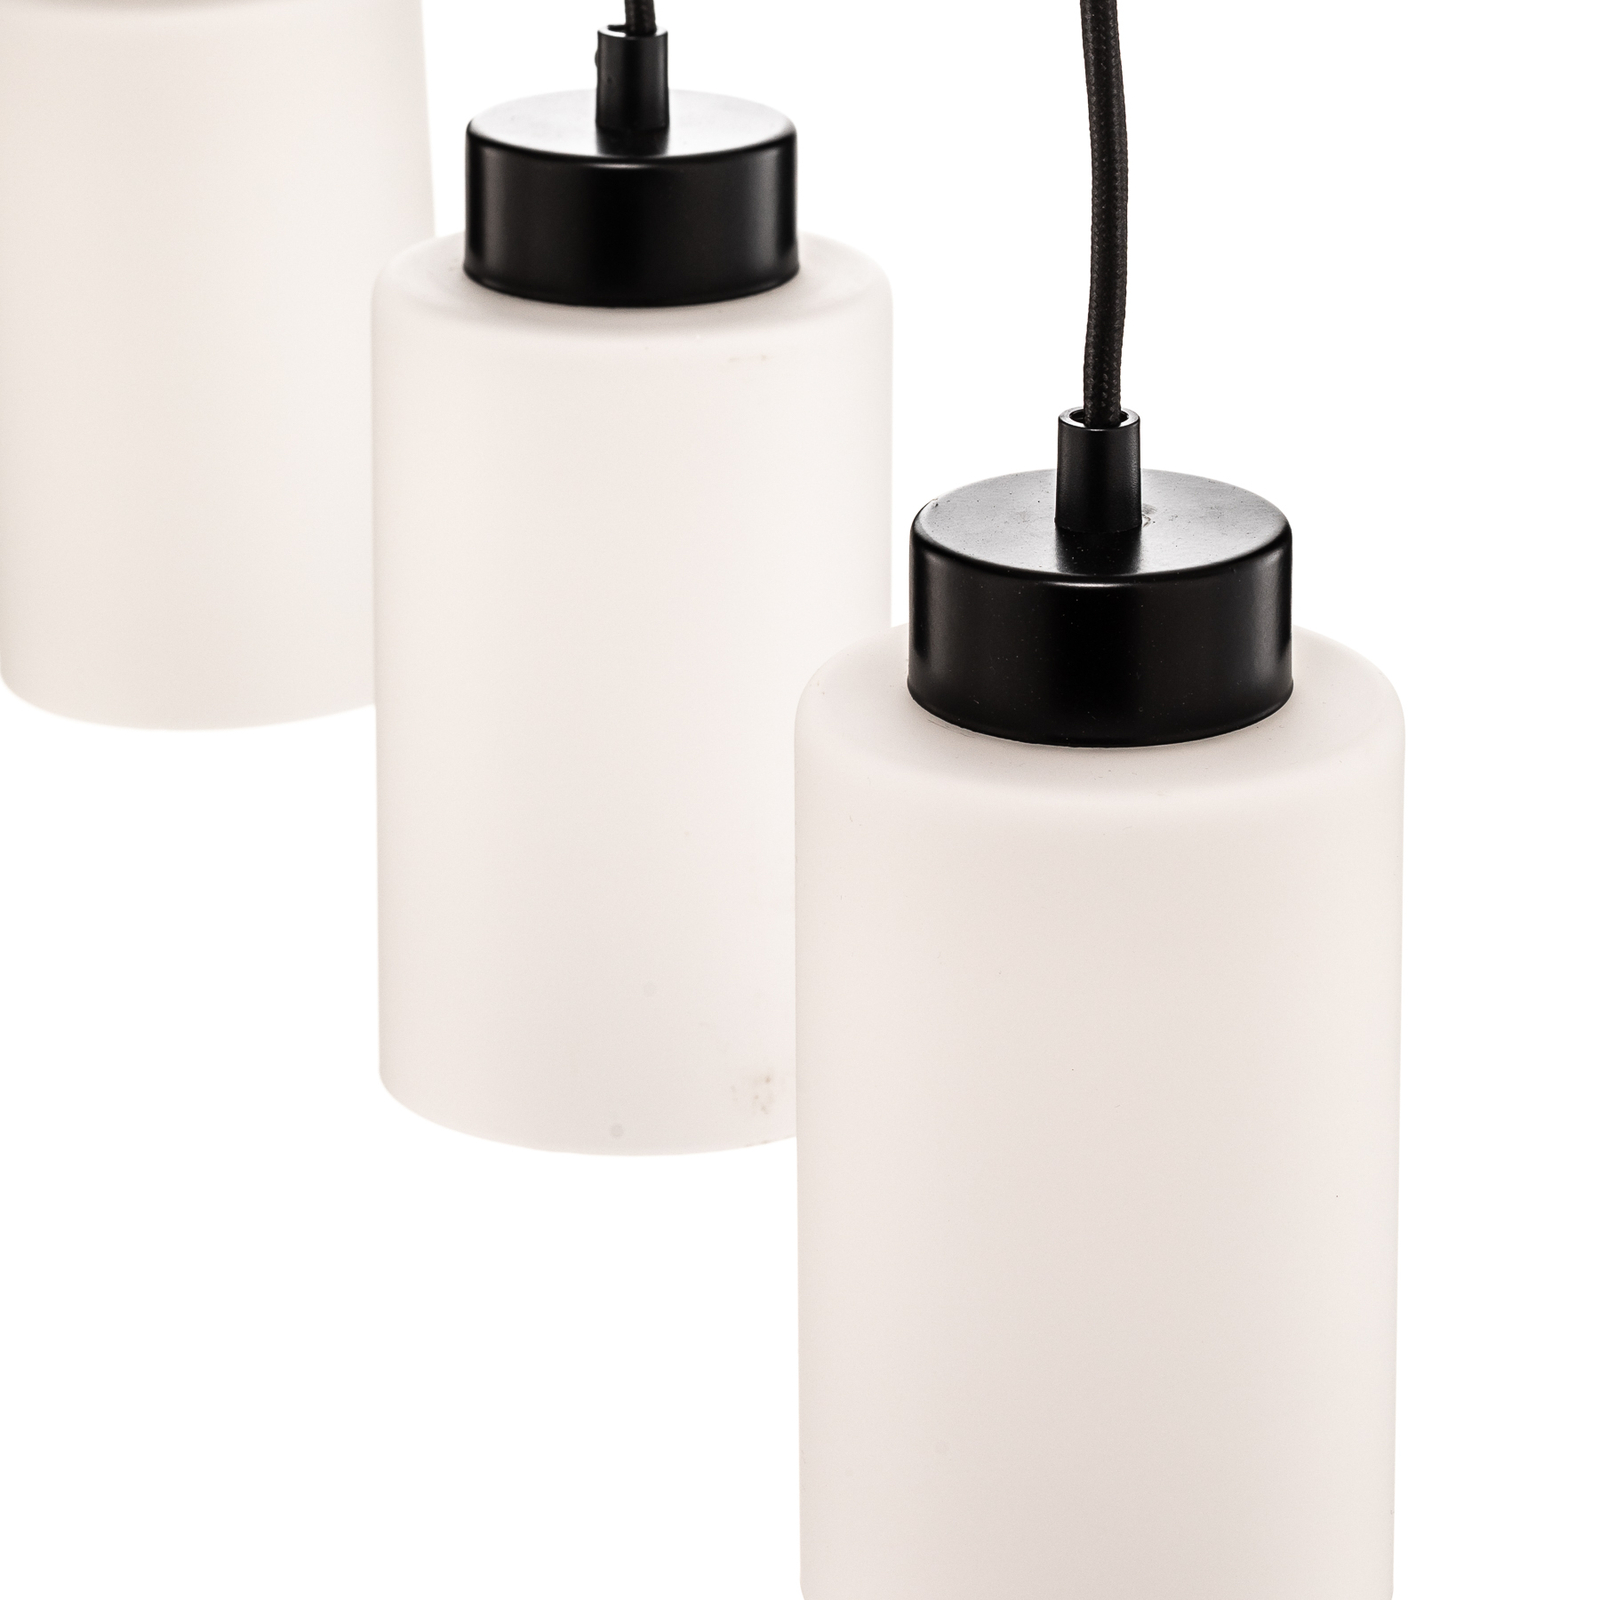 Pendellampa Vitrio, 3 lampor, avlång, svart/vit